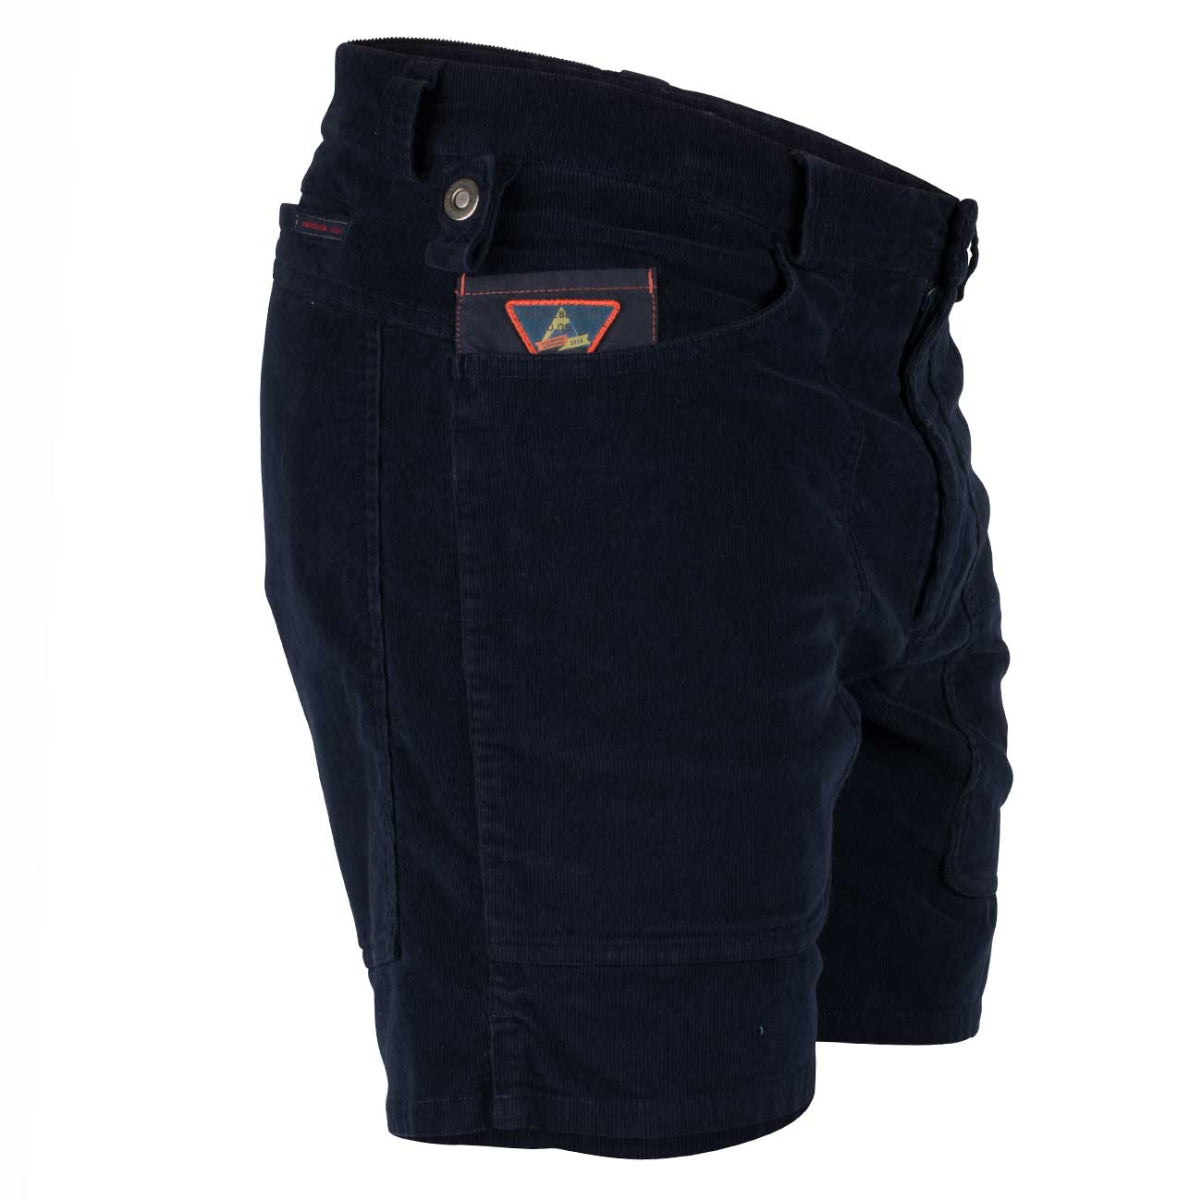 Amundsen Sports - Men's 7 Incher Concord Garment Dyed Shorts - Faded Navy